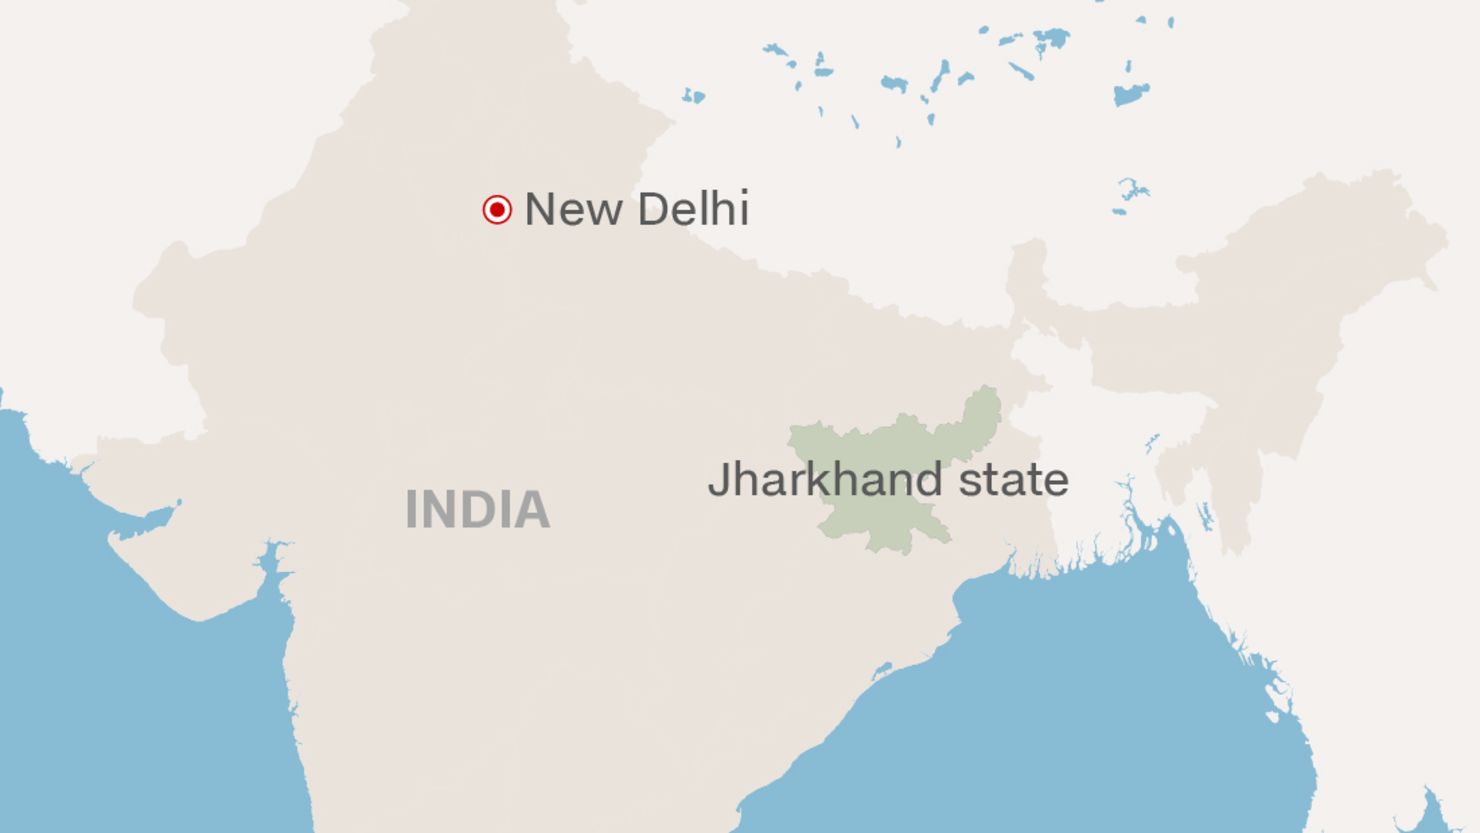 india jharkhand state